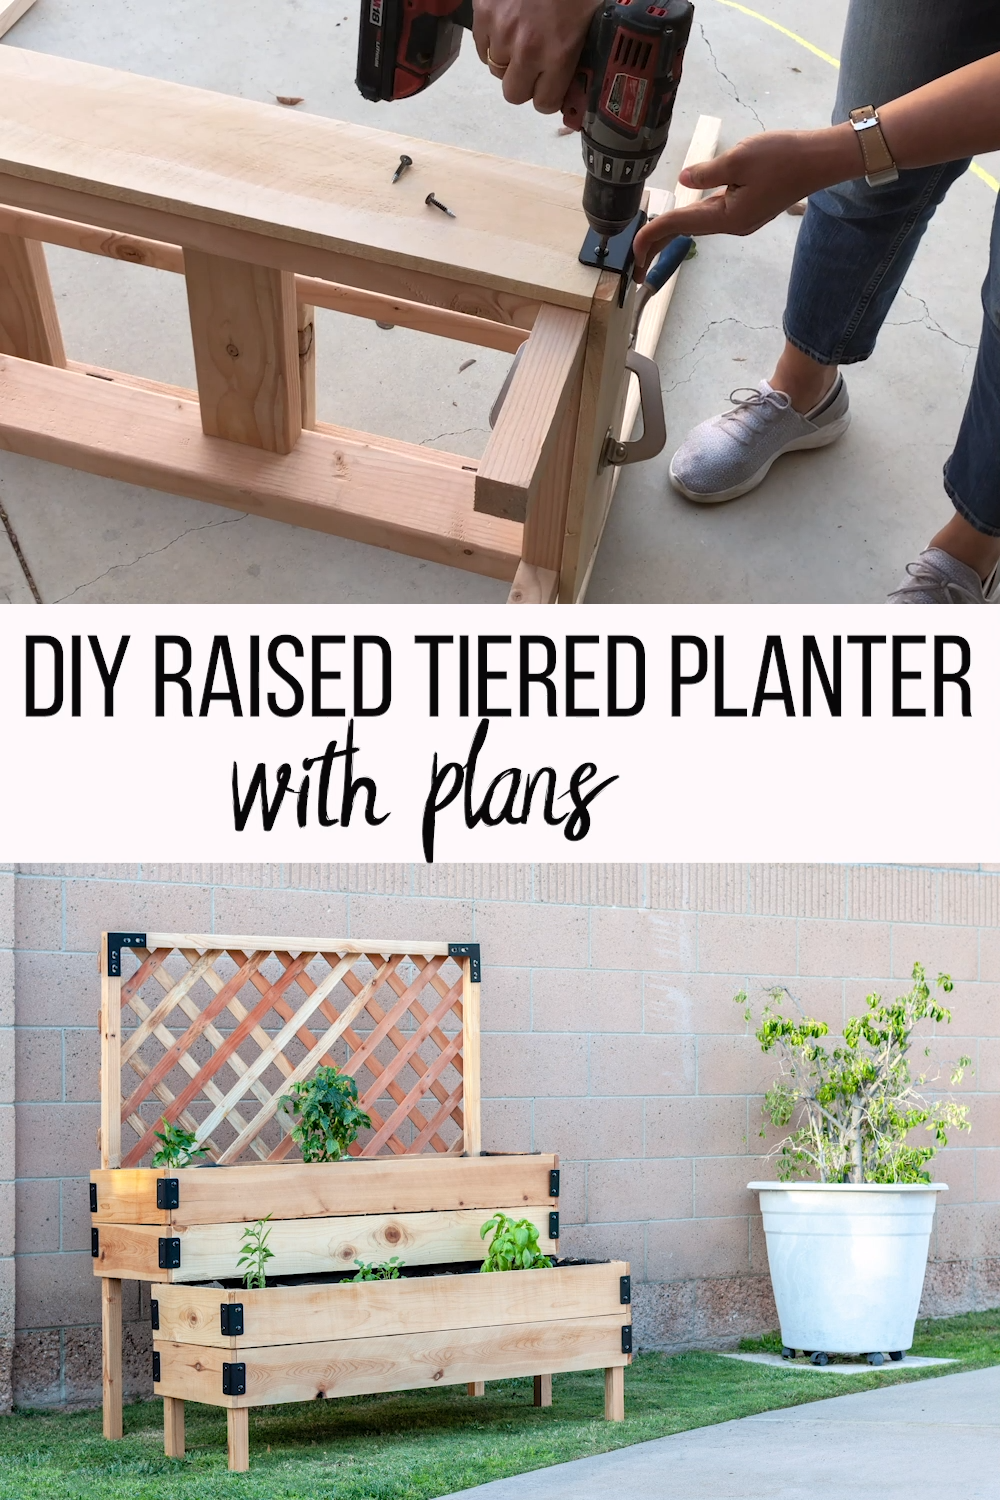 14 planting DIY backyards ideas